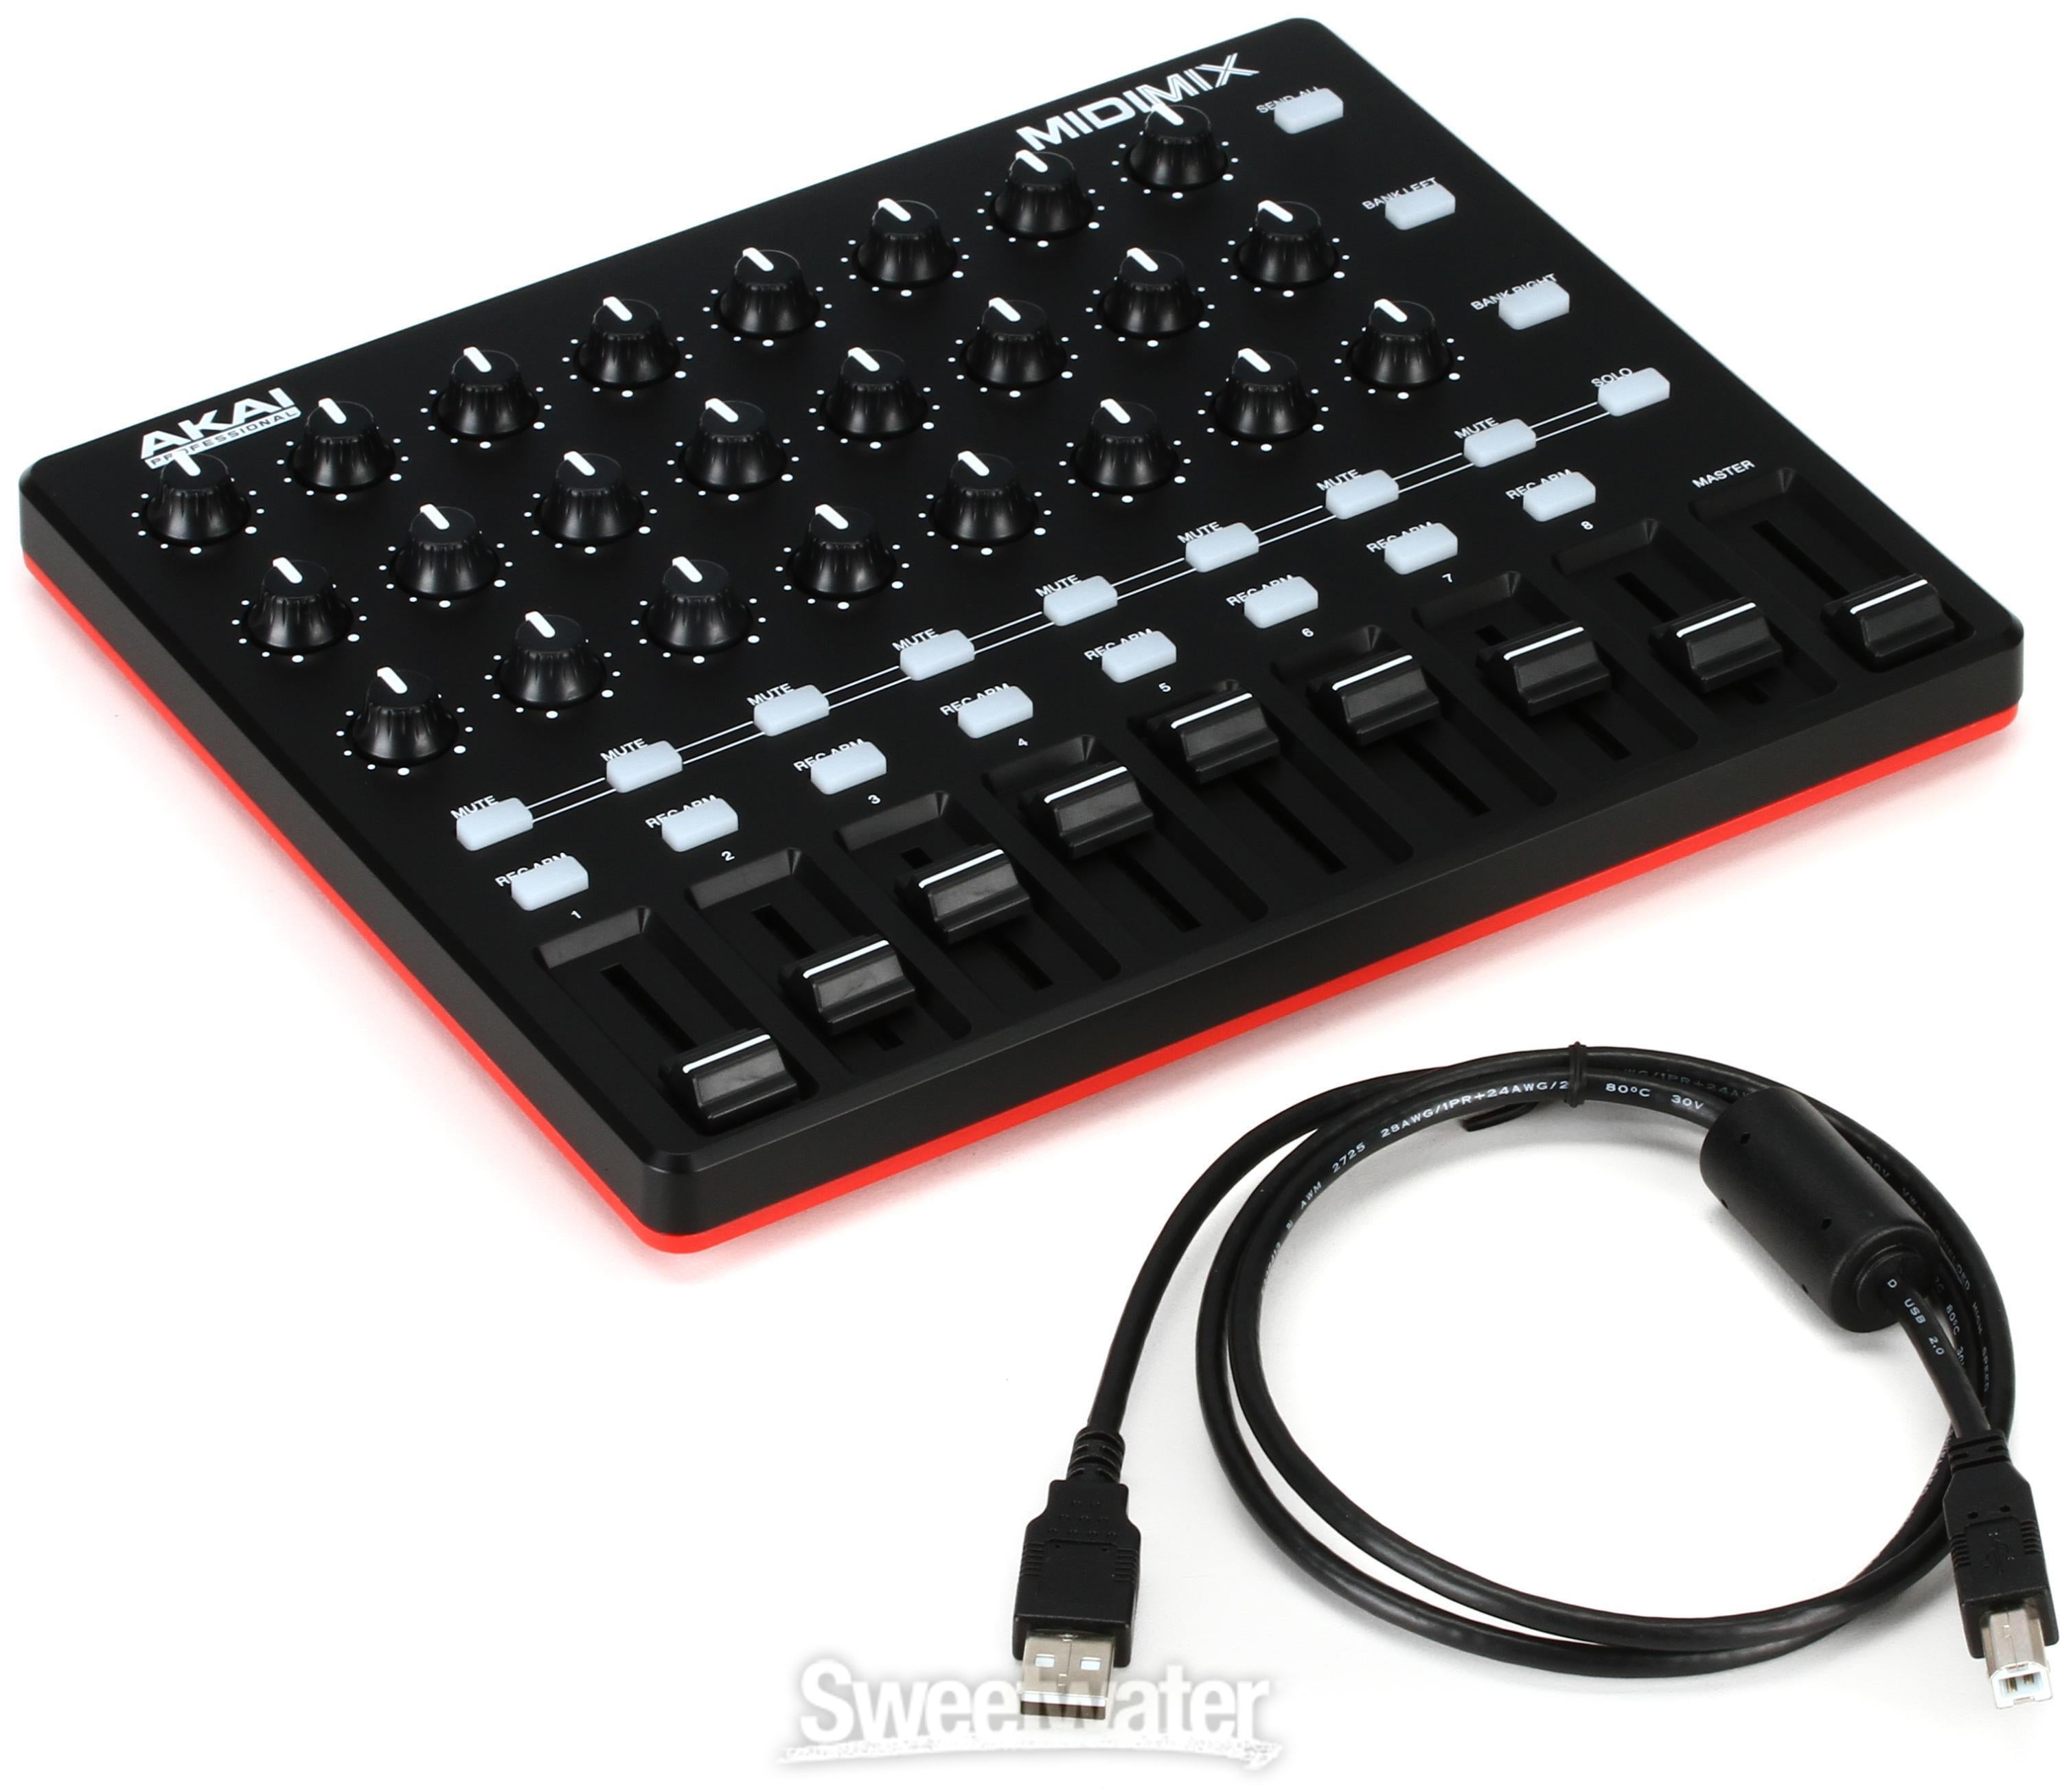 Akai Professional MIDImix MIDI Control Surface | Sweetwater